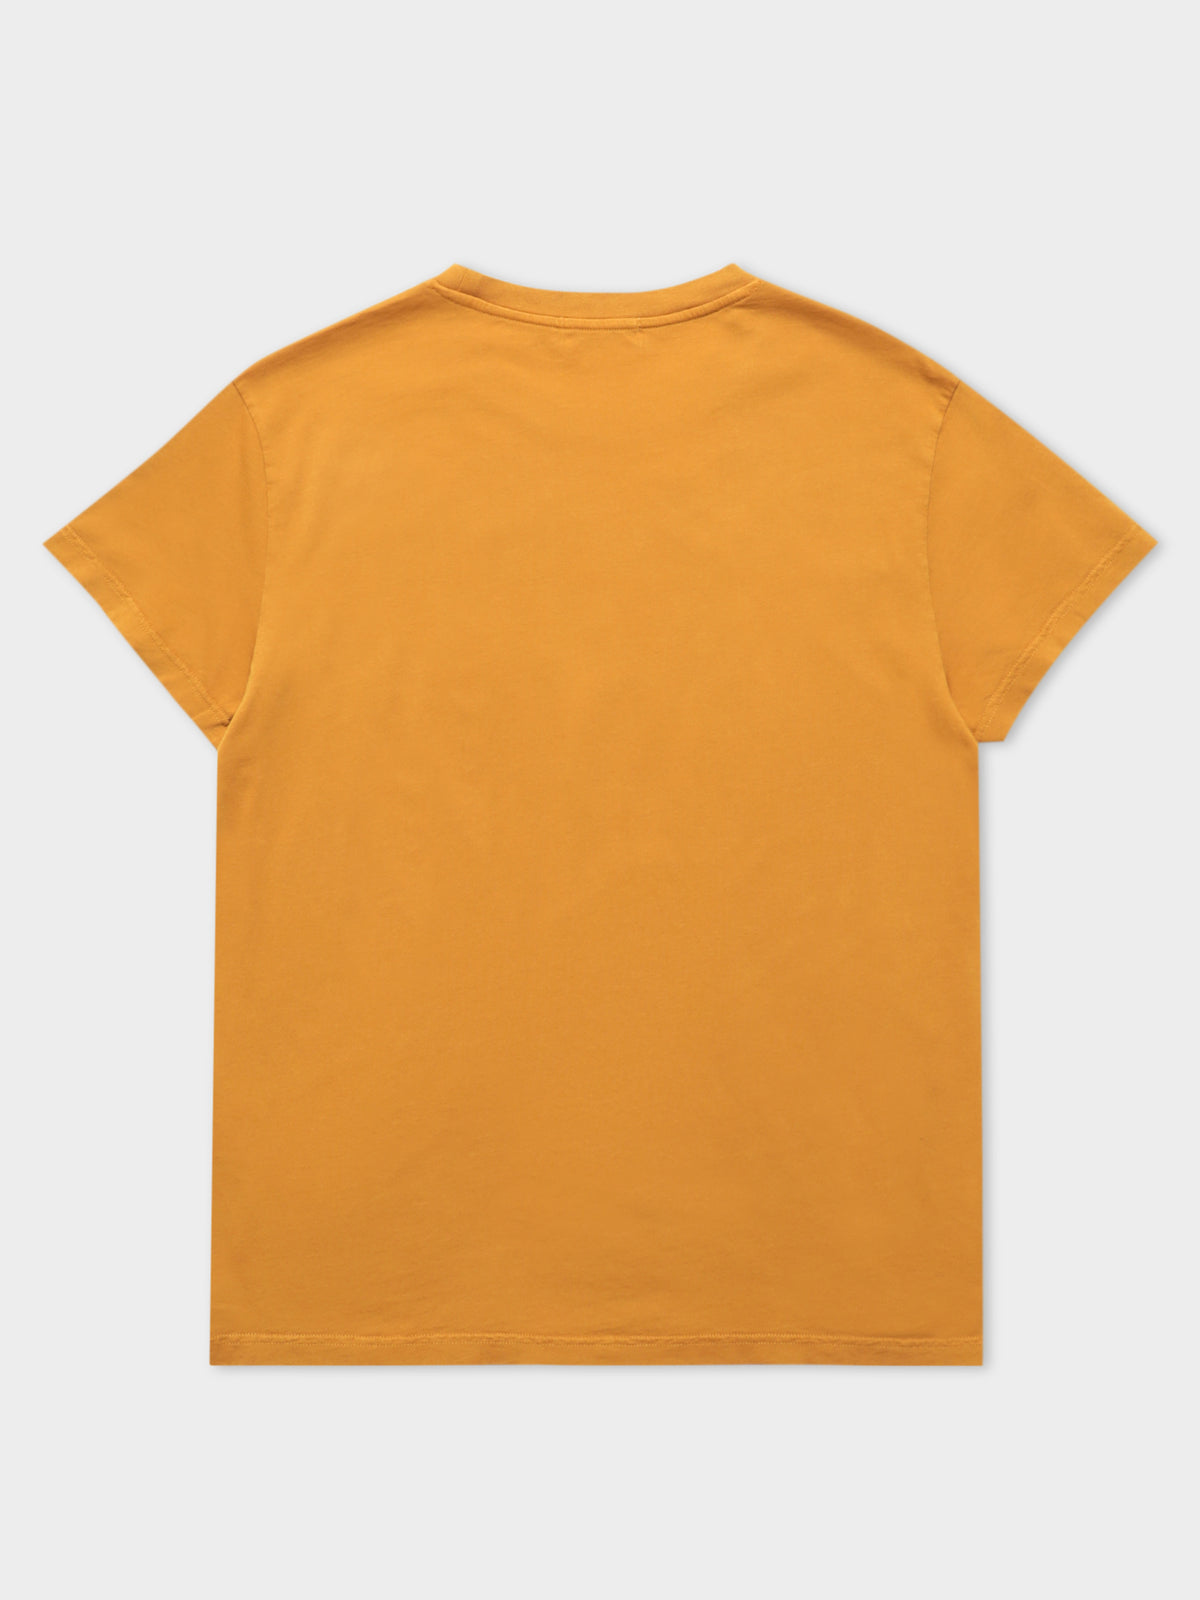 Camper Tina T-Shirt in Amber